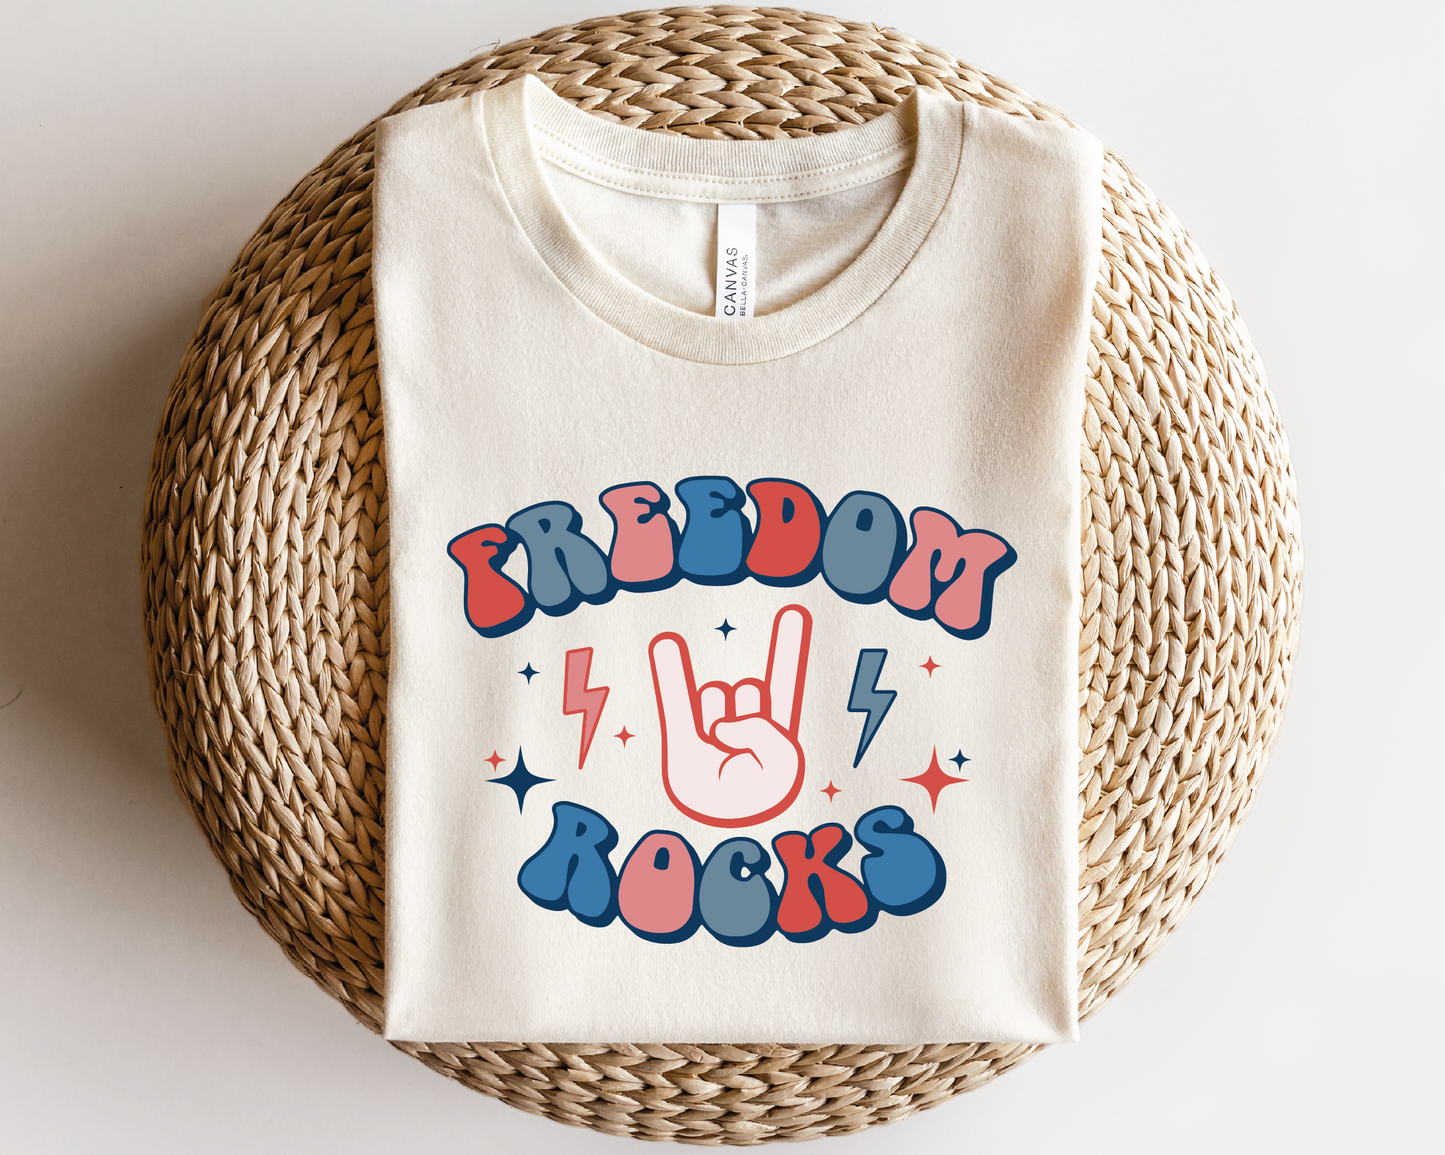 Freedom Rocks SVG PNG | America Patriotic Sublimation | Fourth of July | Retro Vintage T shirt Design